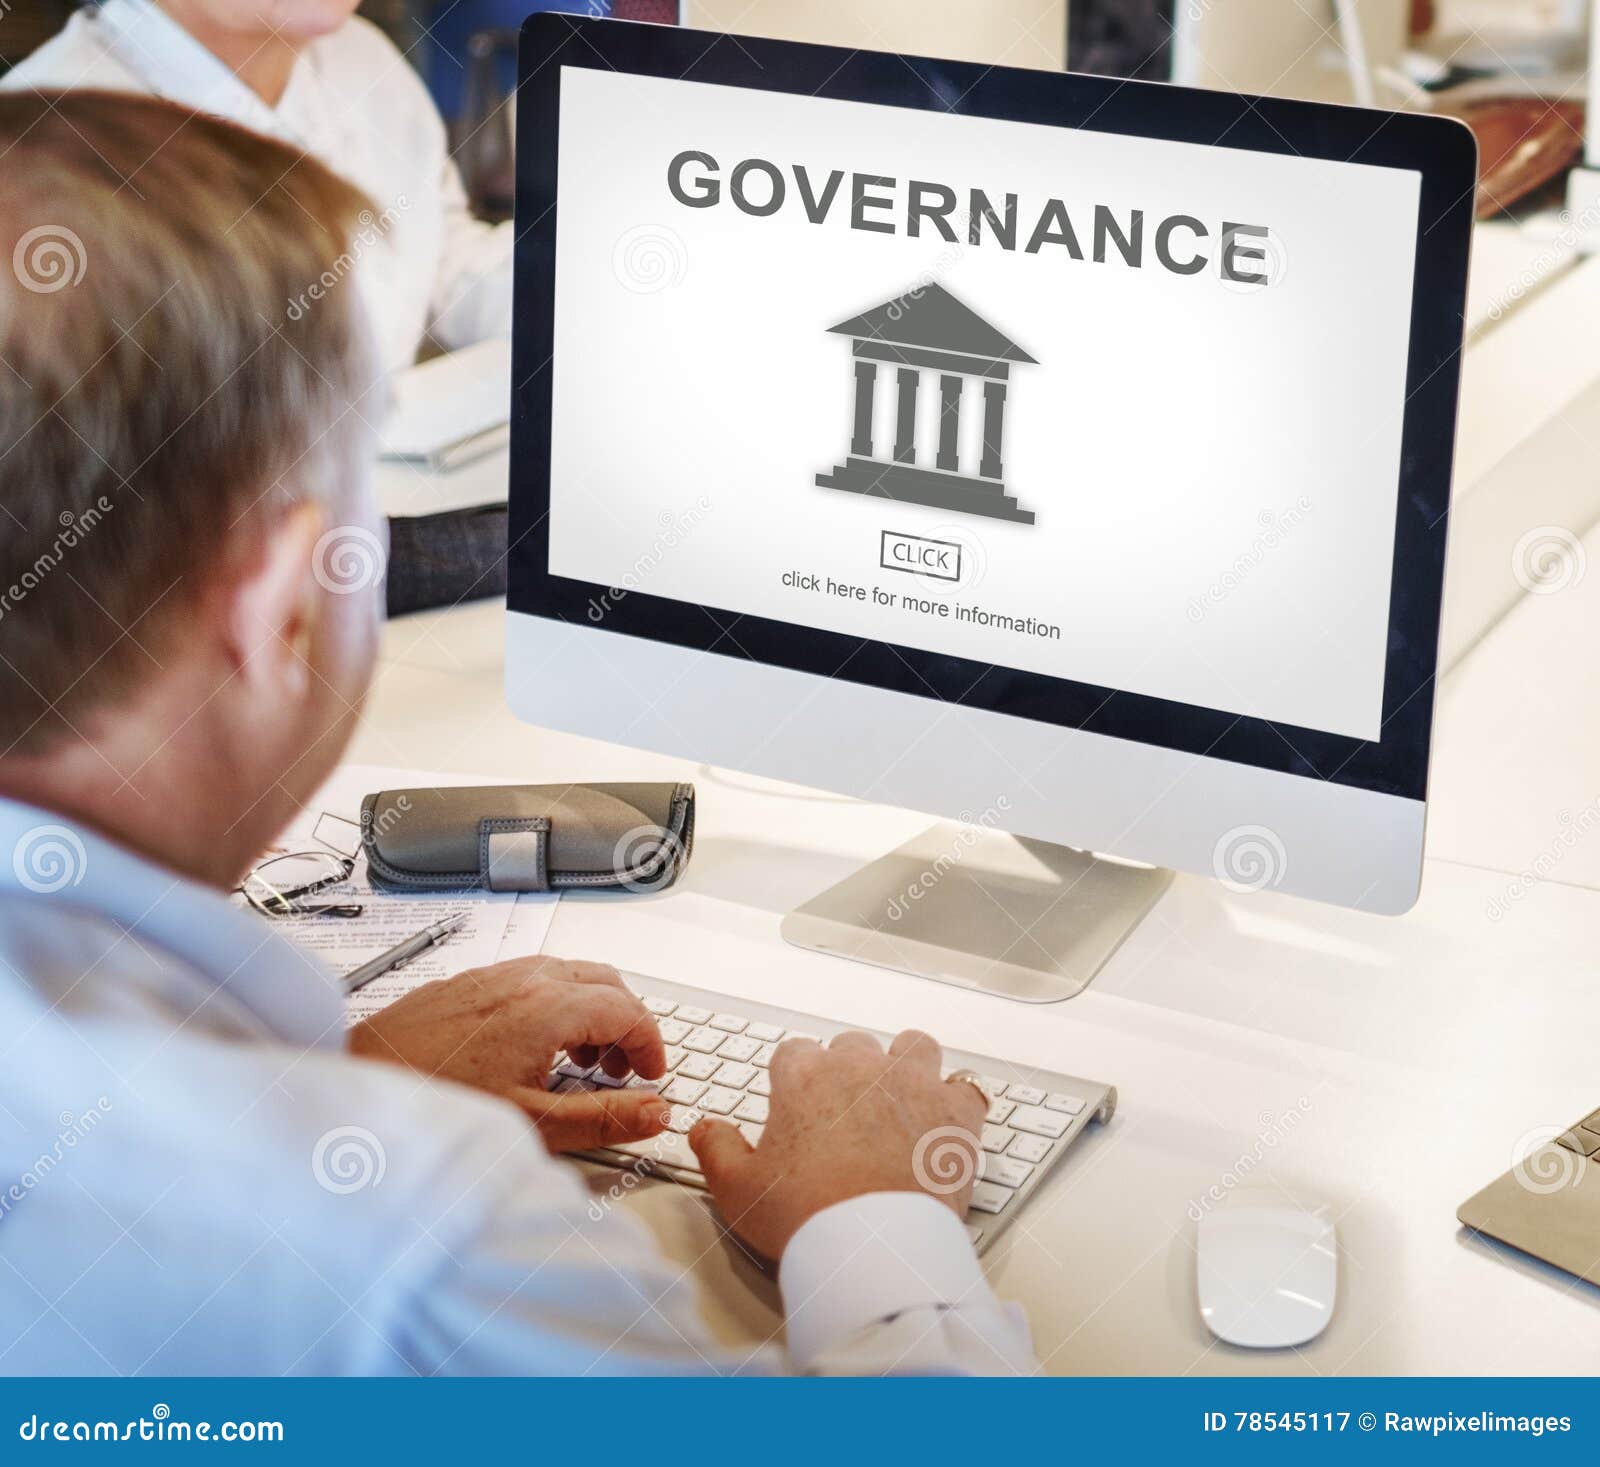 authority government pillar graphic concept